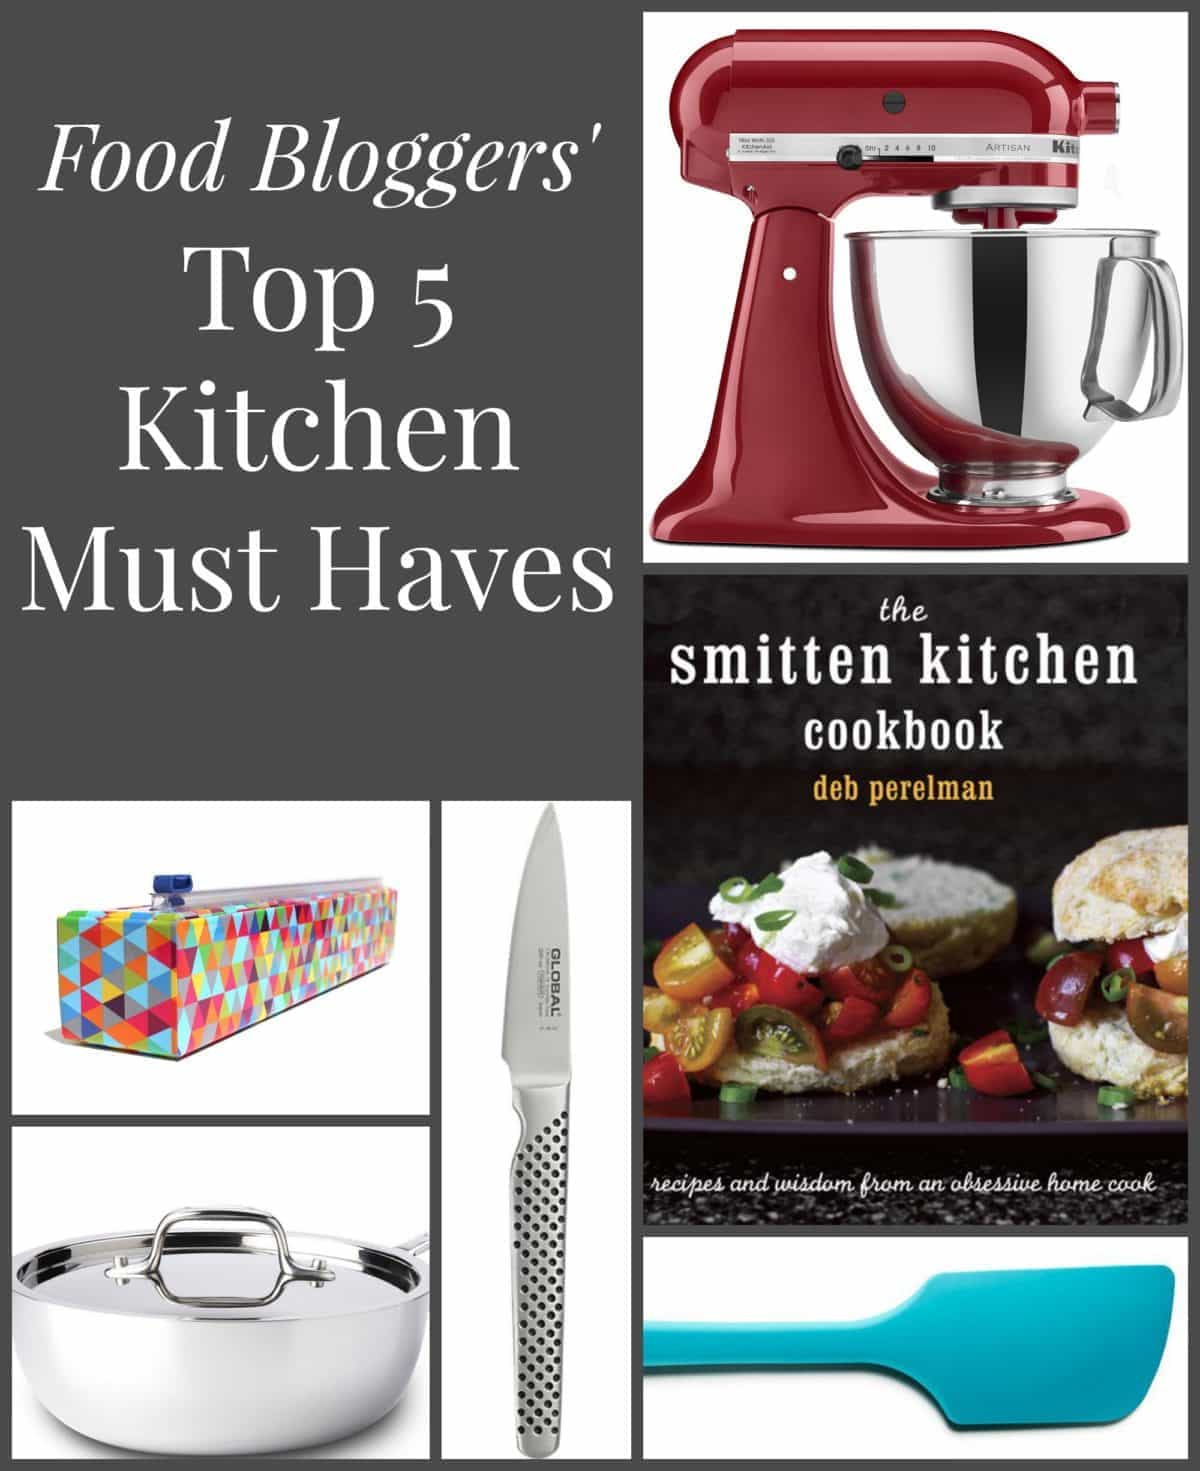 https://neighborfoodblog.com/wp-content/uploads/2014/11/kitchen-must-haves-4.jpg